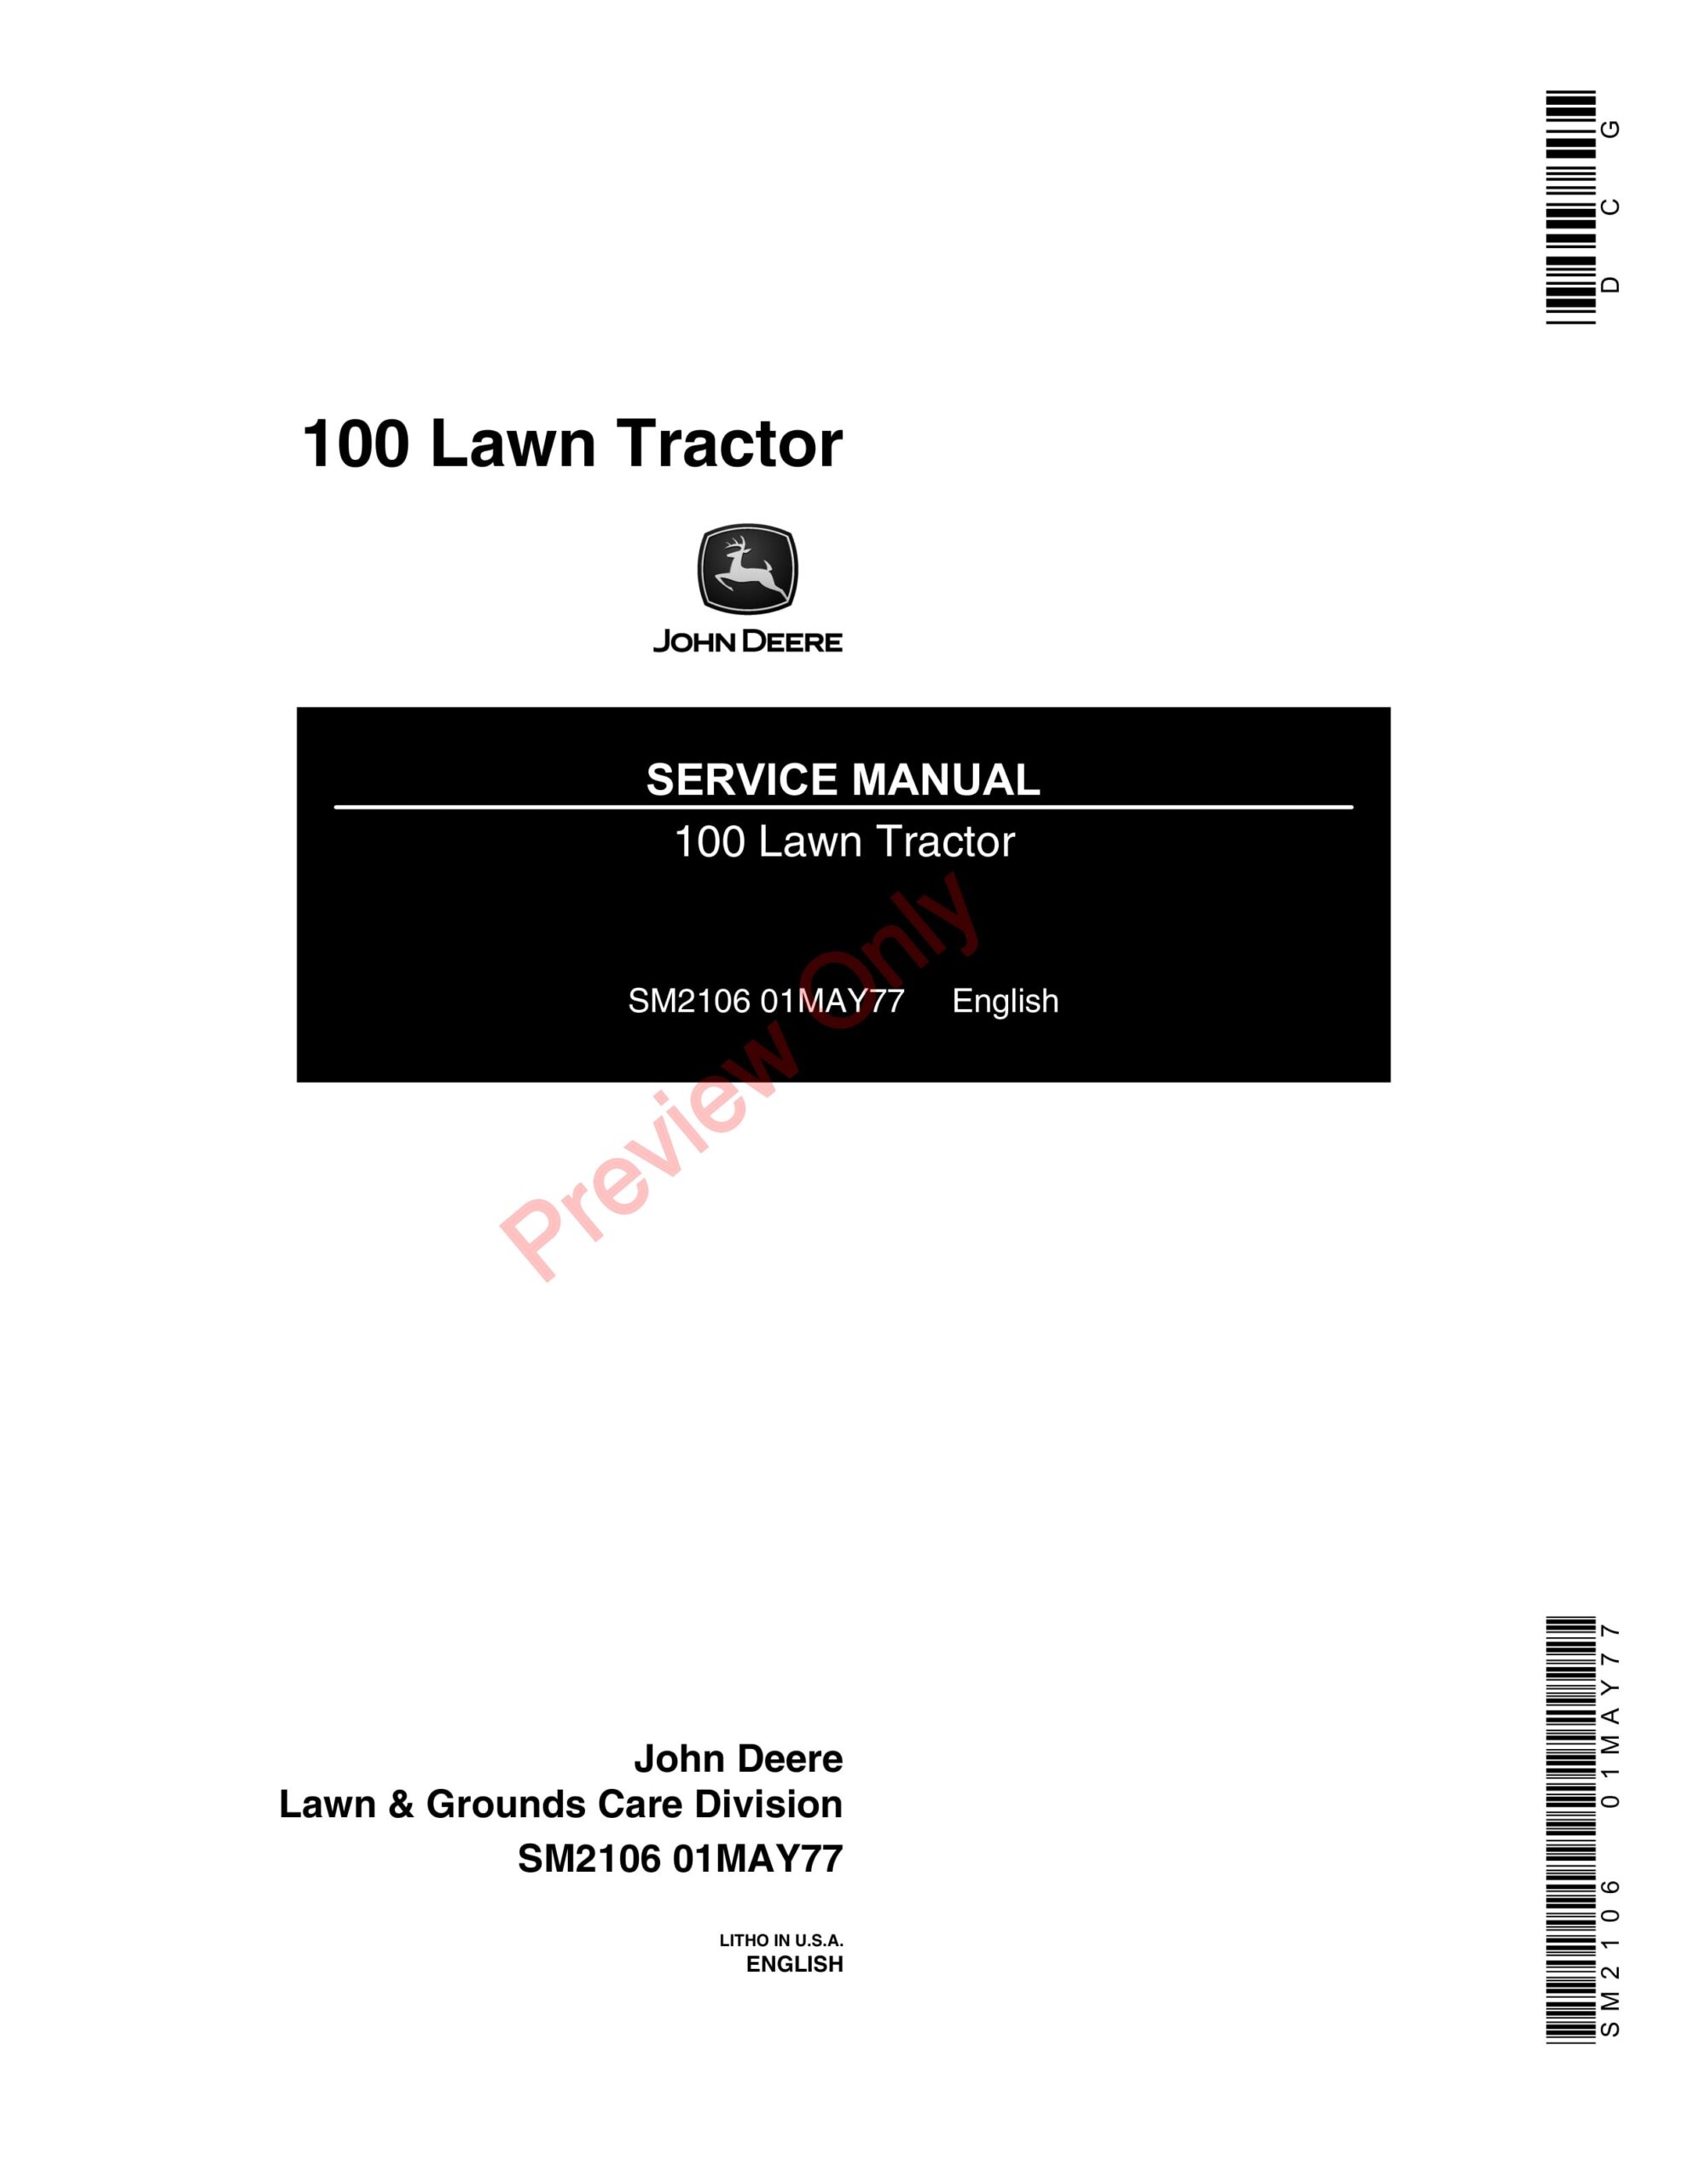 John Deere 100 Lawn Tractor Service Manual SM2106 01MAY77-1